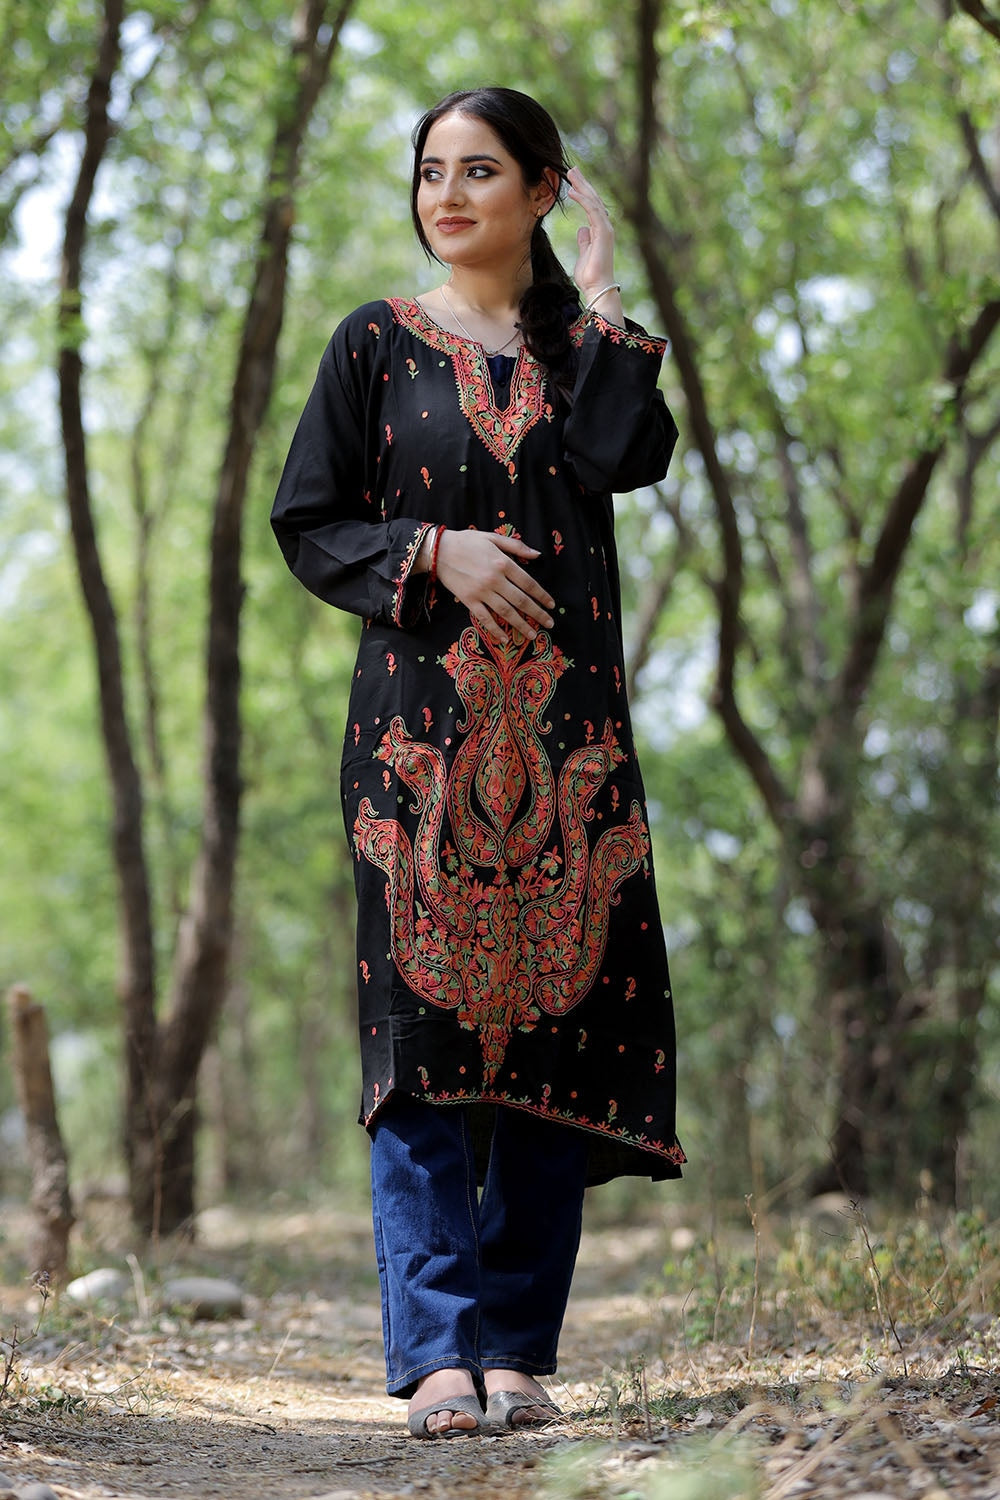 Shehnaaz Gill new photo| Beauty in black! Shehnaaz Gill looks resplendent  in a kurti as she poses for a selfie